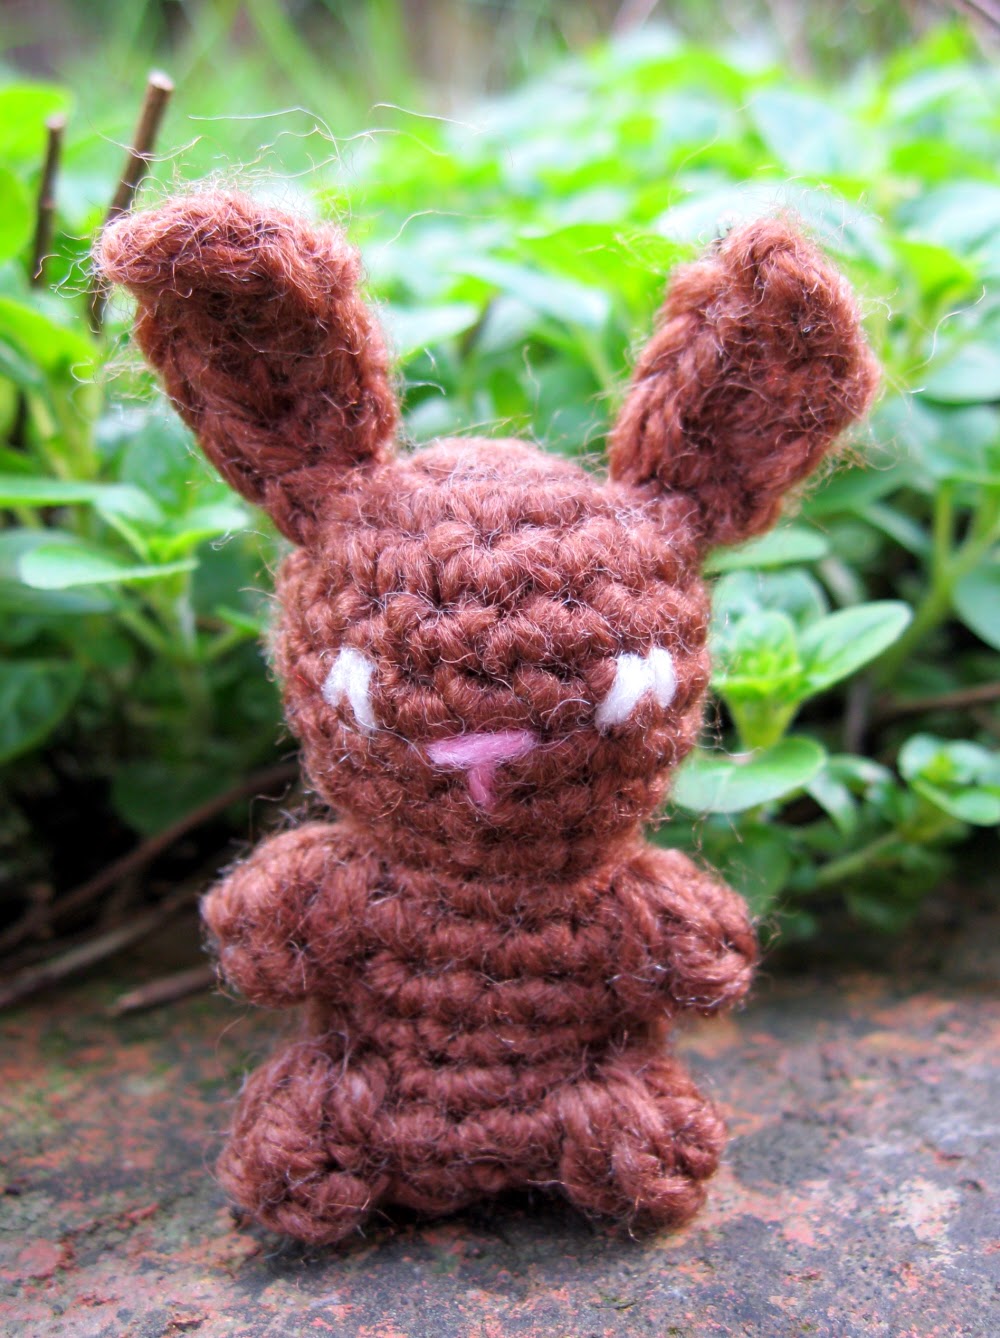 LucyRavenscar - Crochet Creatures: Harry Potter Crochet